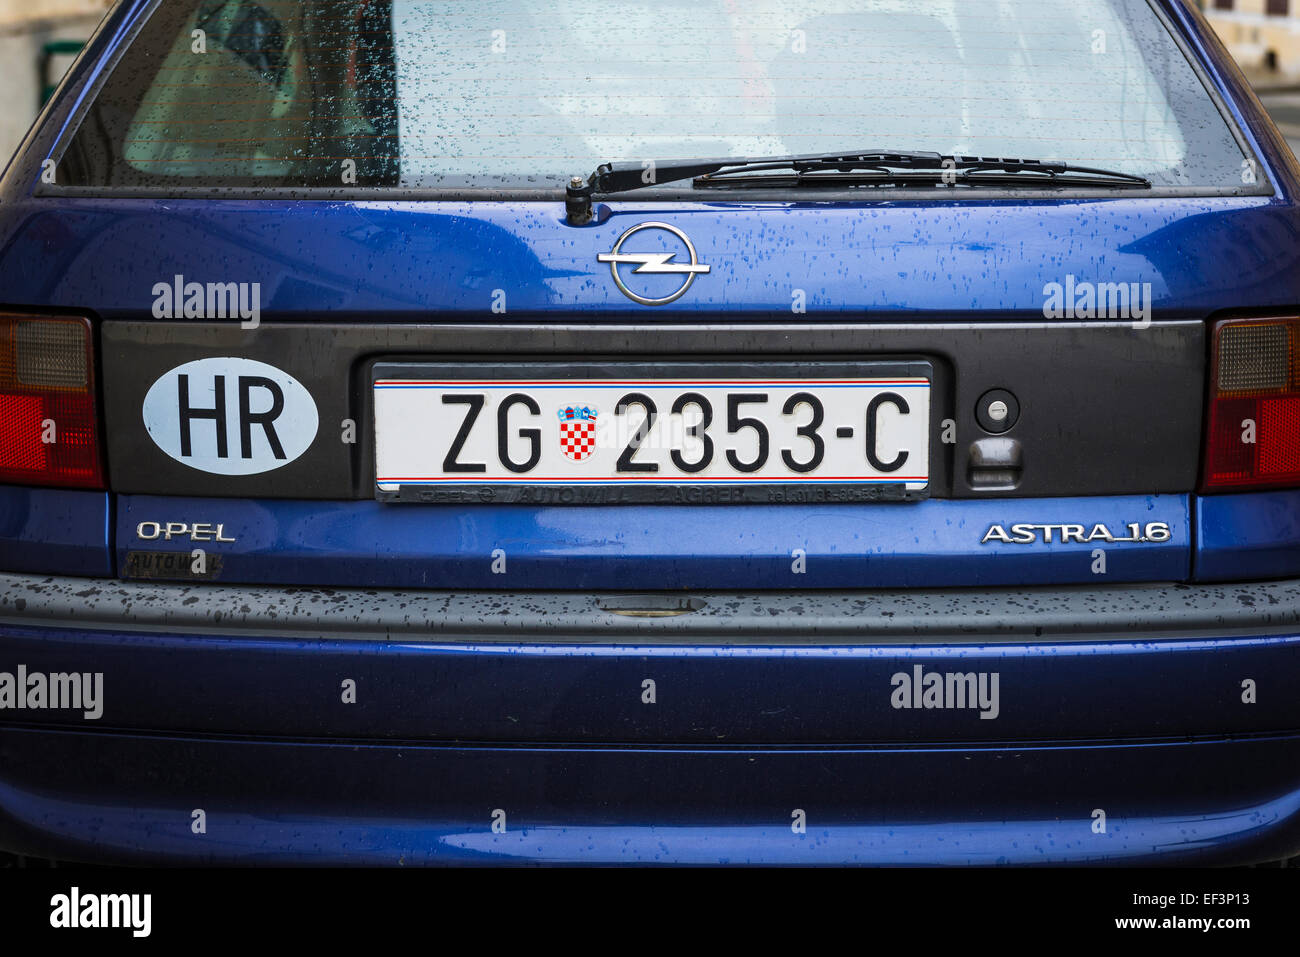 Auto targa e paese tag, Zagabria, Croazia Foto stock - Alamy